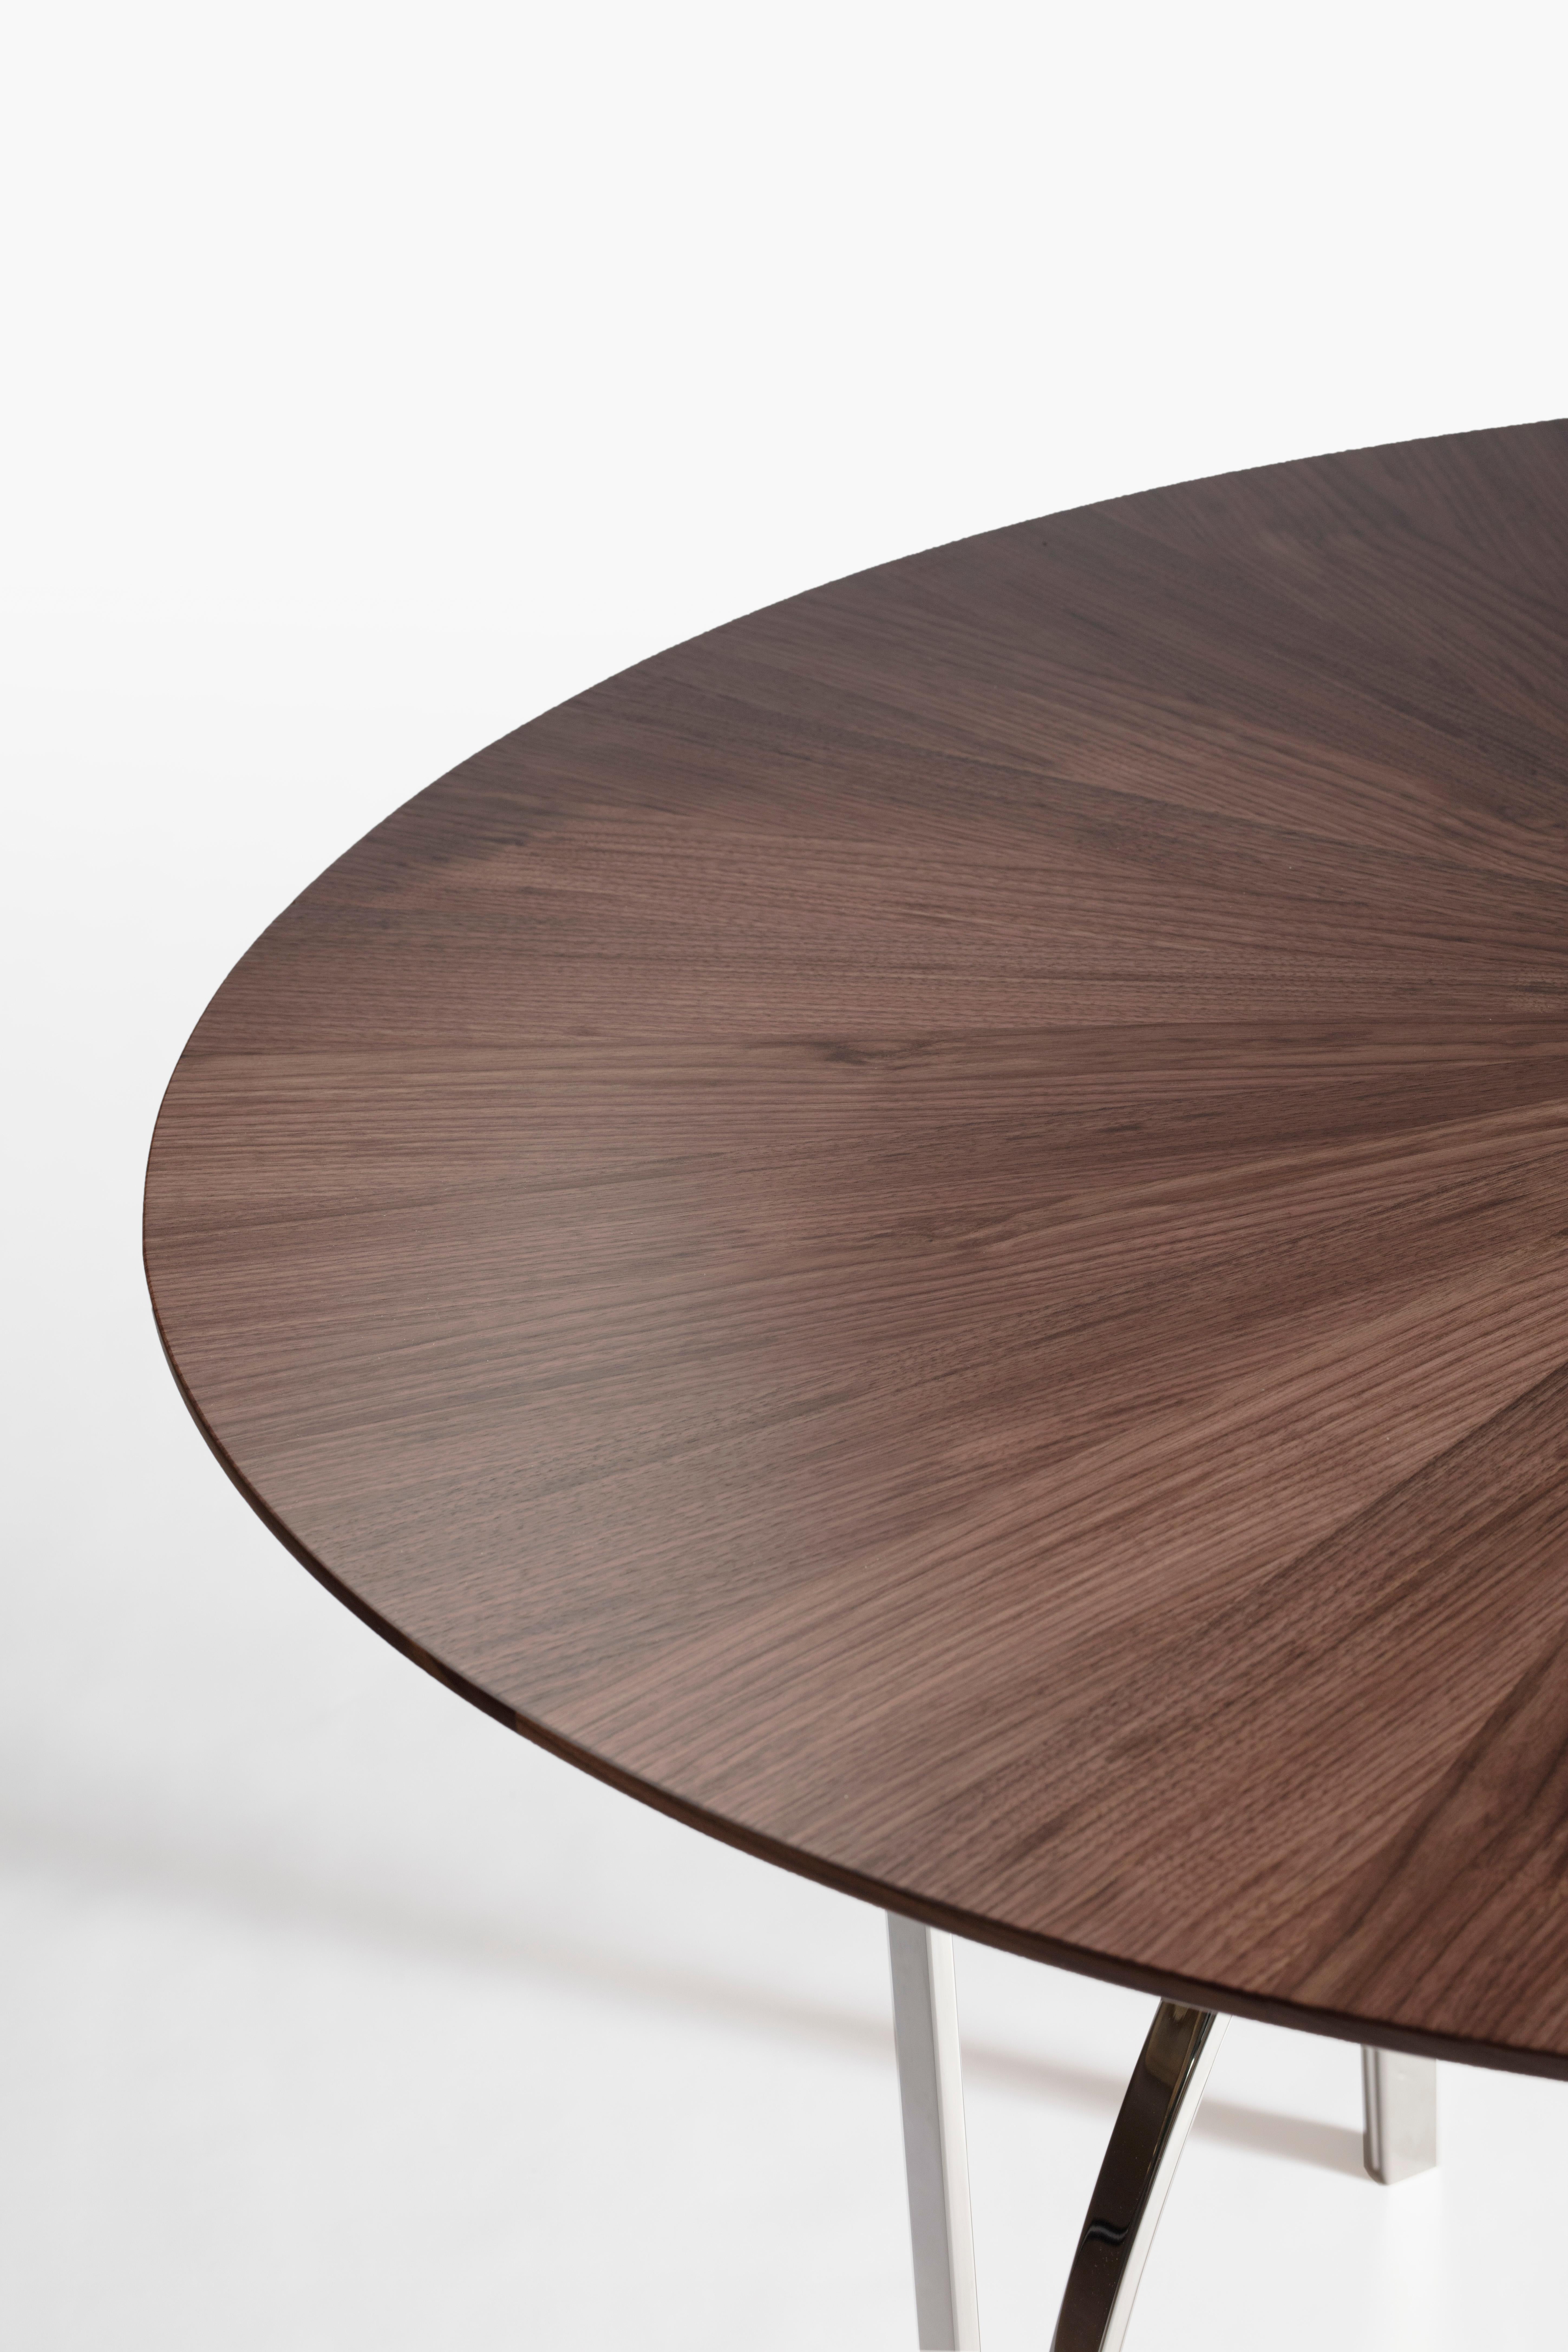 Italian Contemporary Dining Center Table Serena Confalonieri Medulum Wood Steel Walnut For Sale